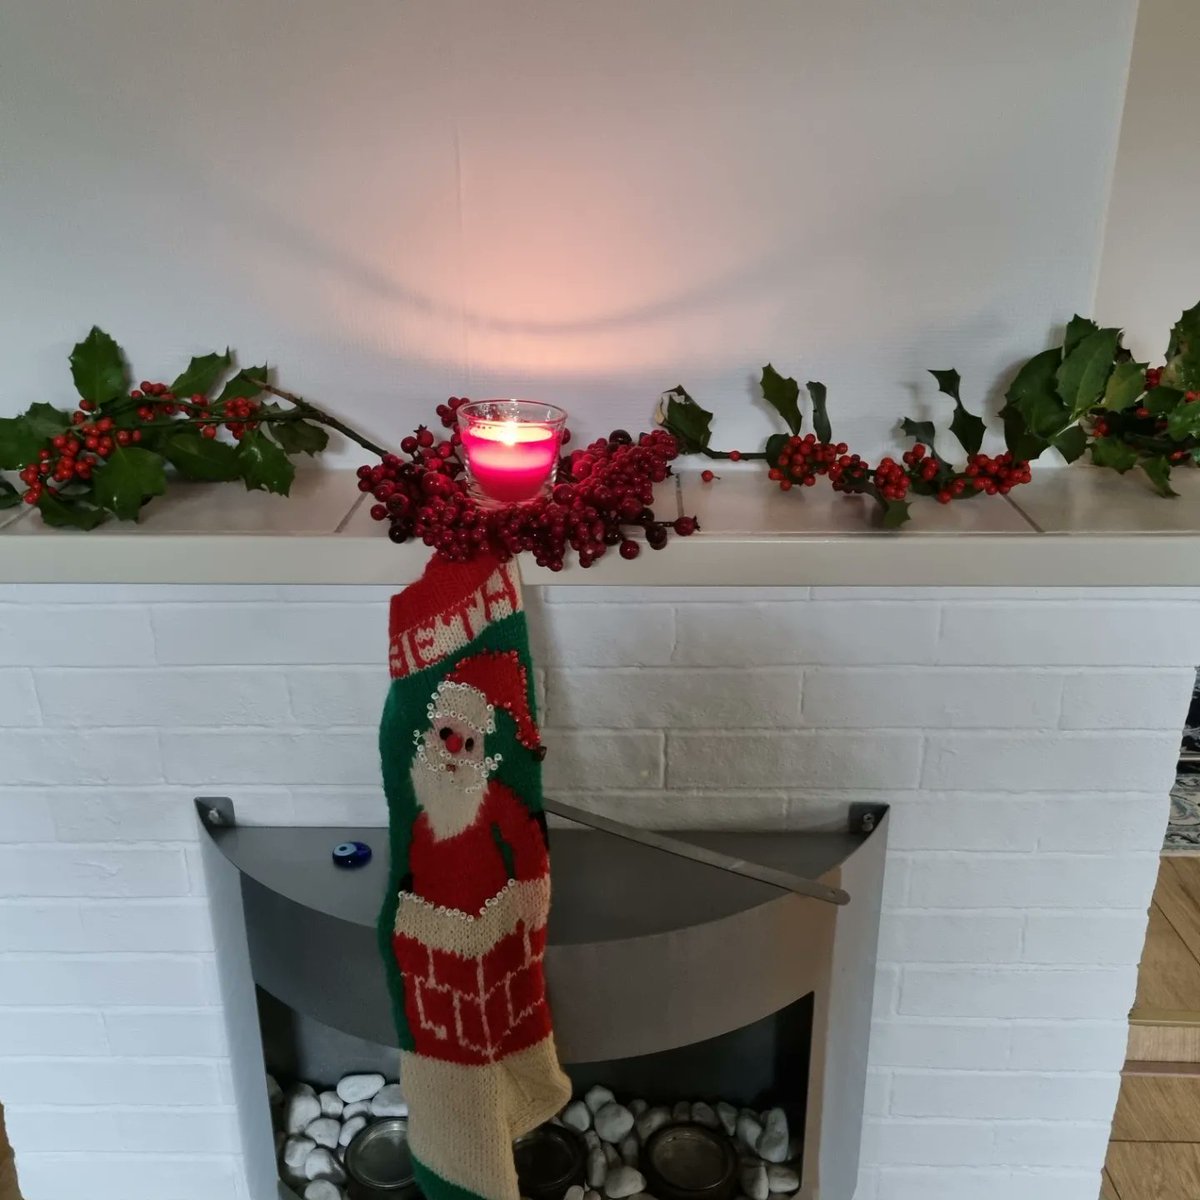 Ready for Christmas! #holidays #holidayseason #HolidaysAreComing #Christmas #christmasdecorations #Christmastrees #stockingstuffers #holly #scentedcandles